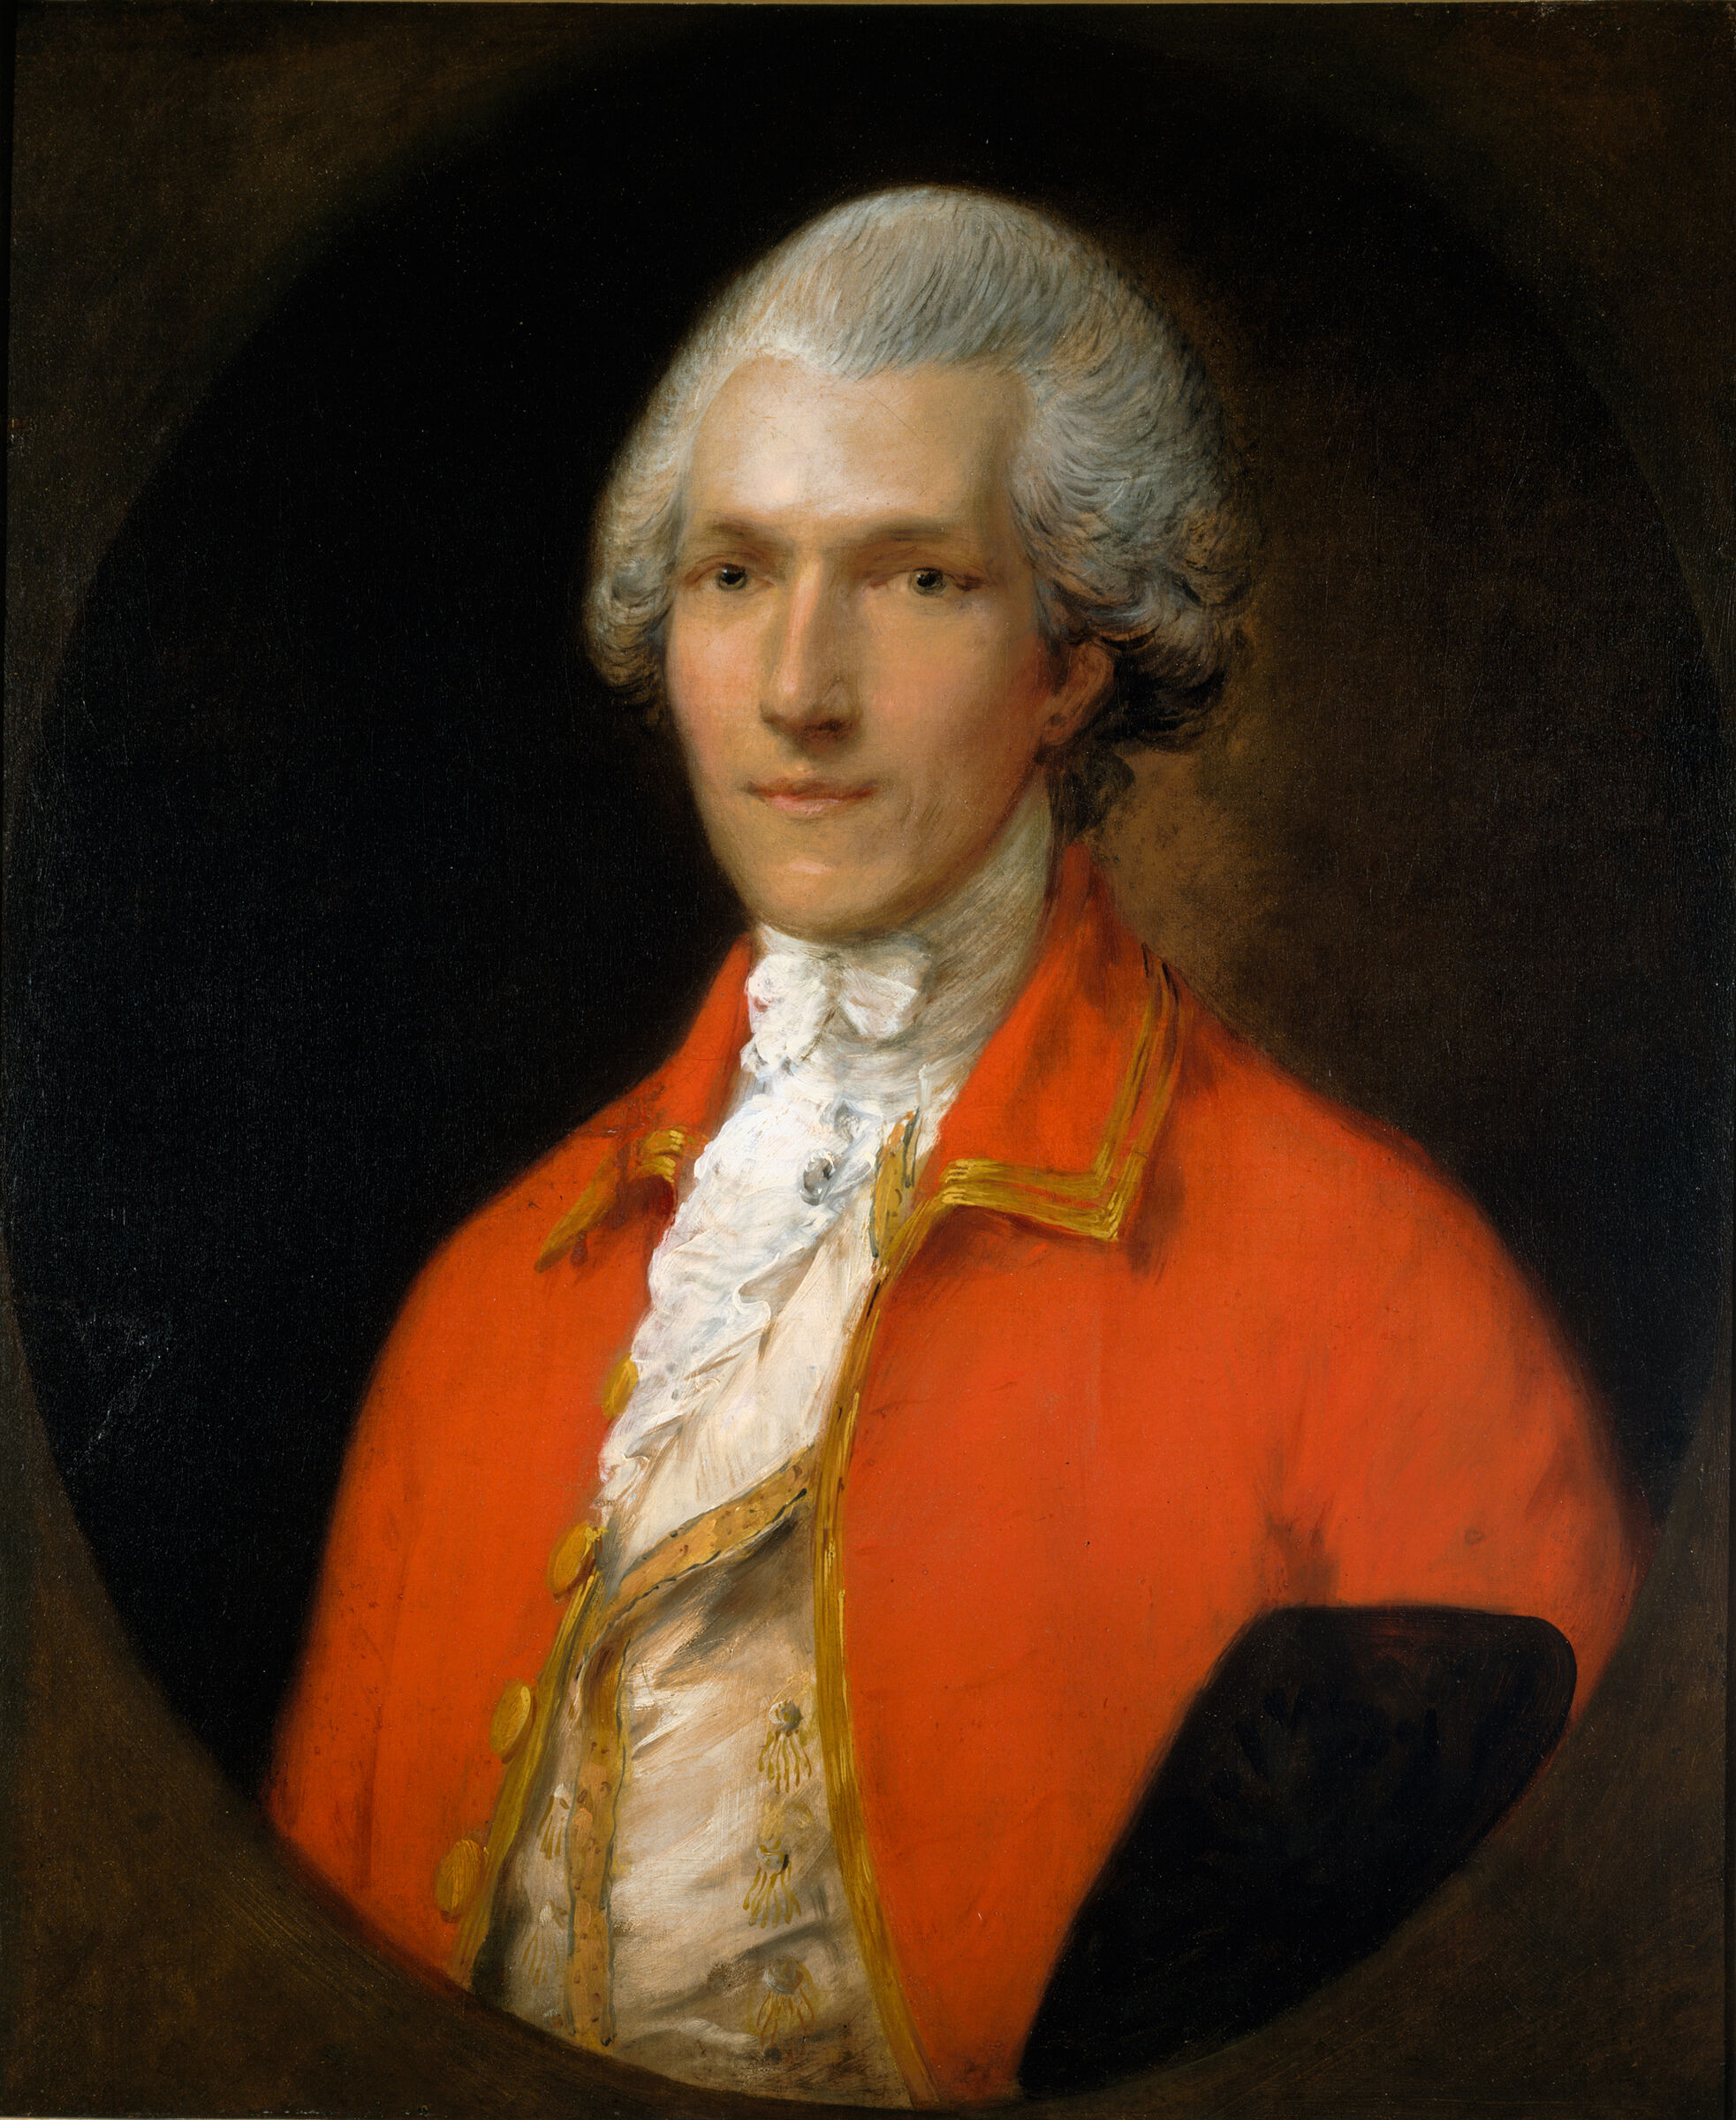 Sir Benjamin Thompson, Later Count Rumford (1753-1814)